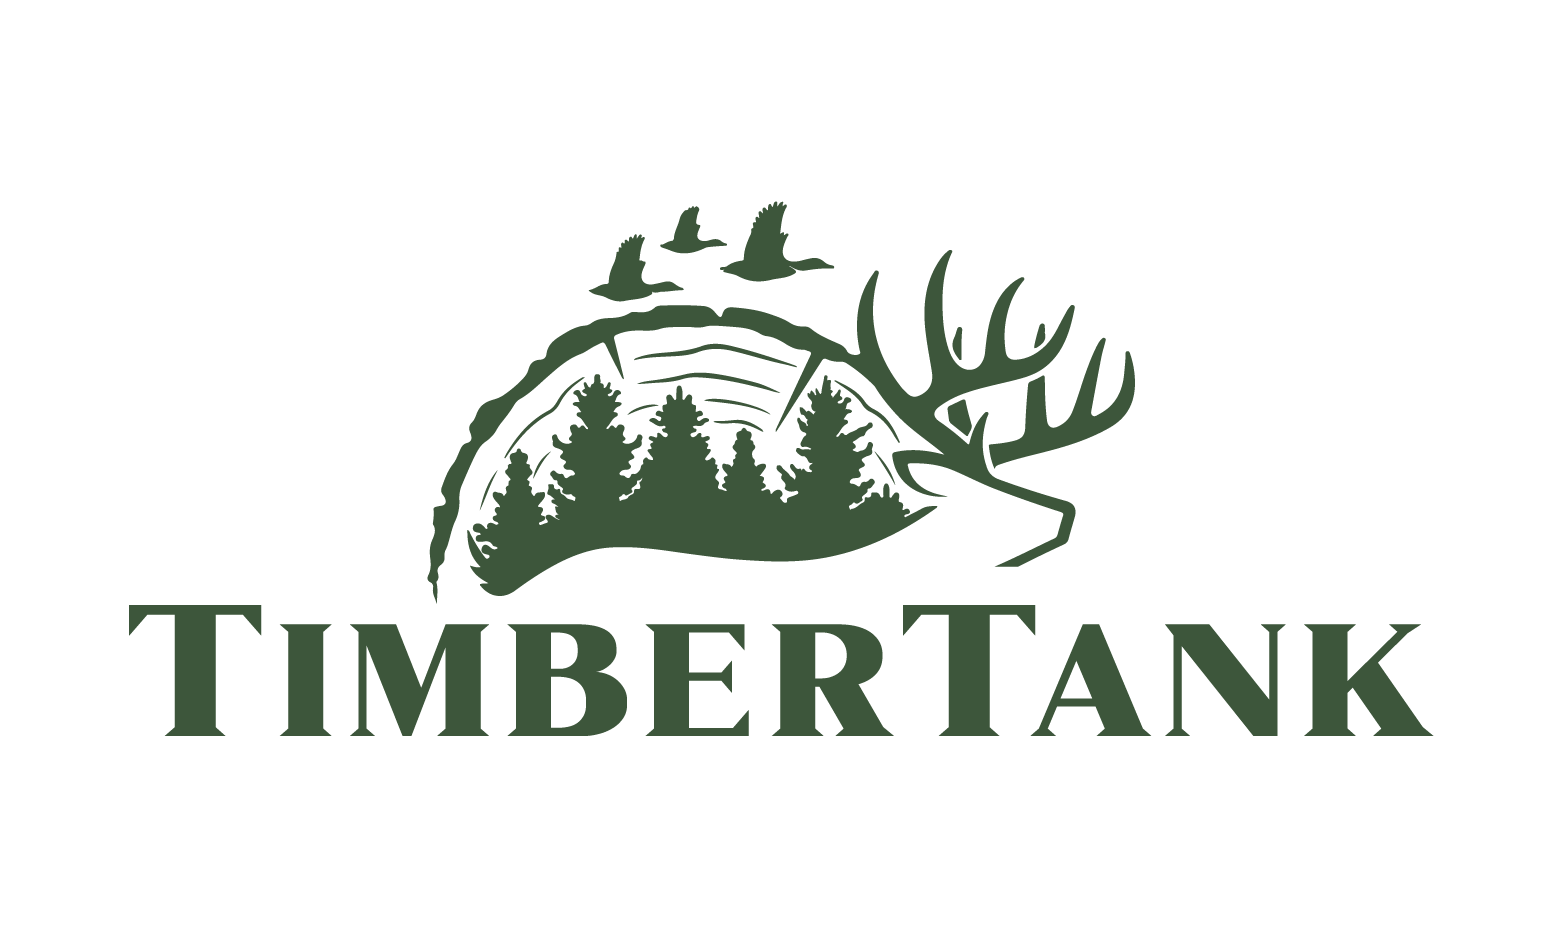 TimberTank.com - Creative brandable domain for sale